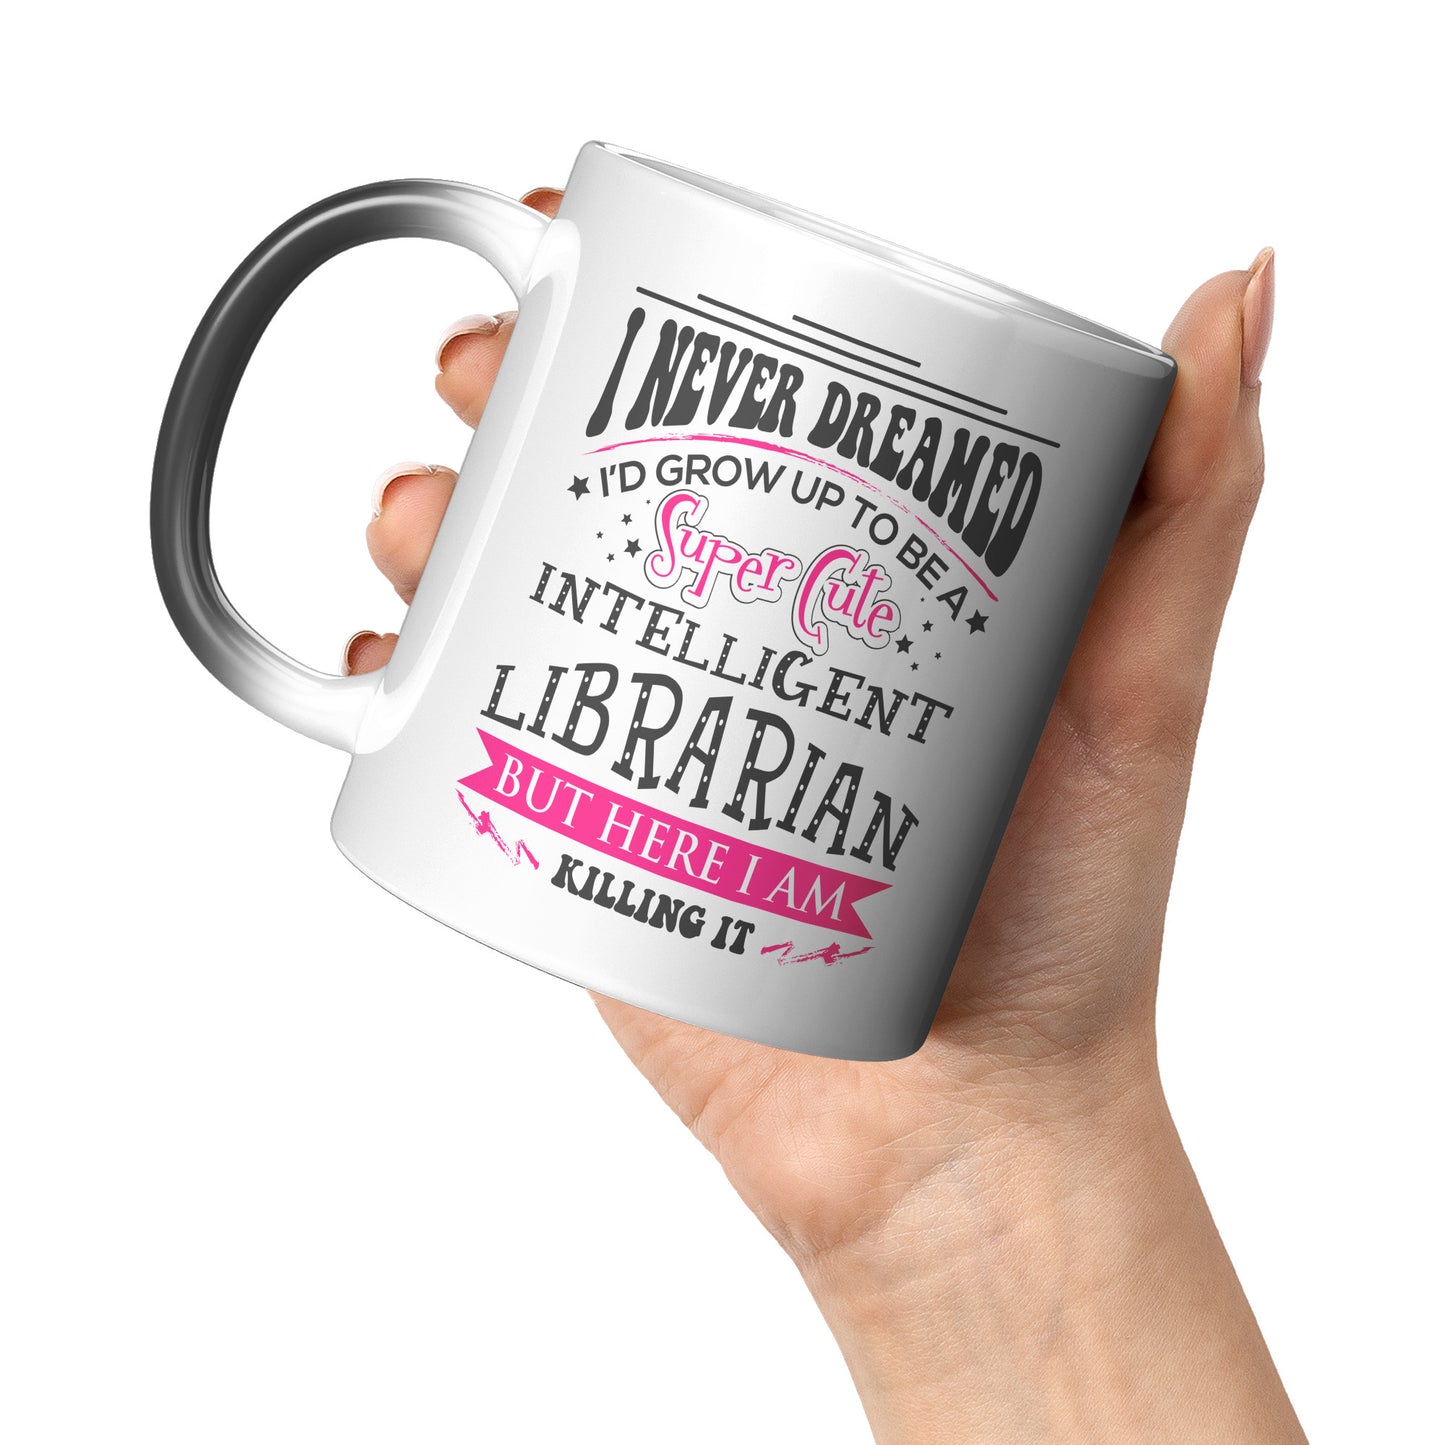 I Never Dreamed I'd Grow Up To Be A Super Cute Intelligent Librarian But Here I Am Killing It | Magic Mug